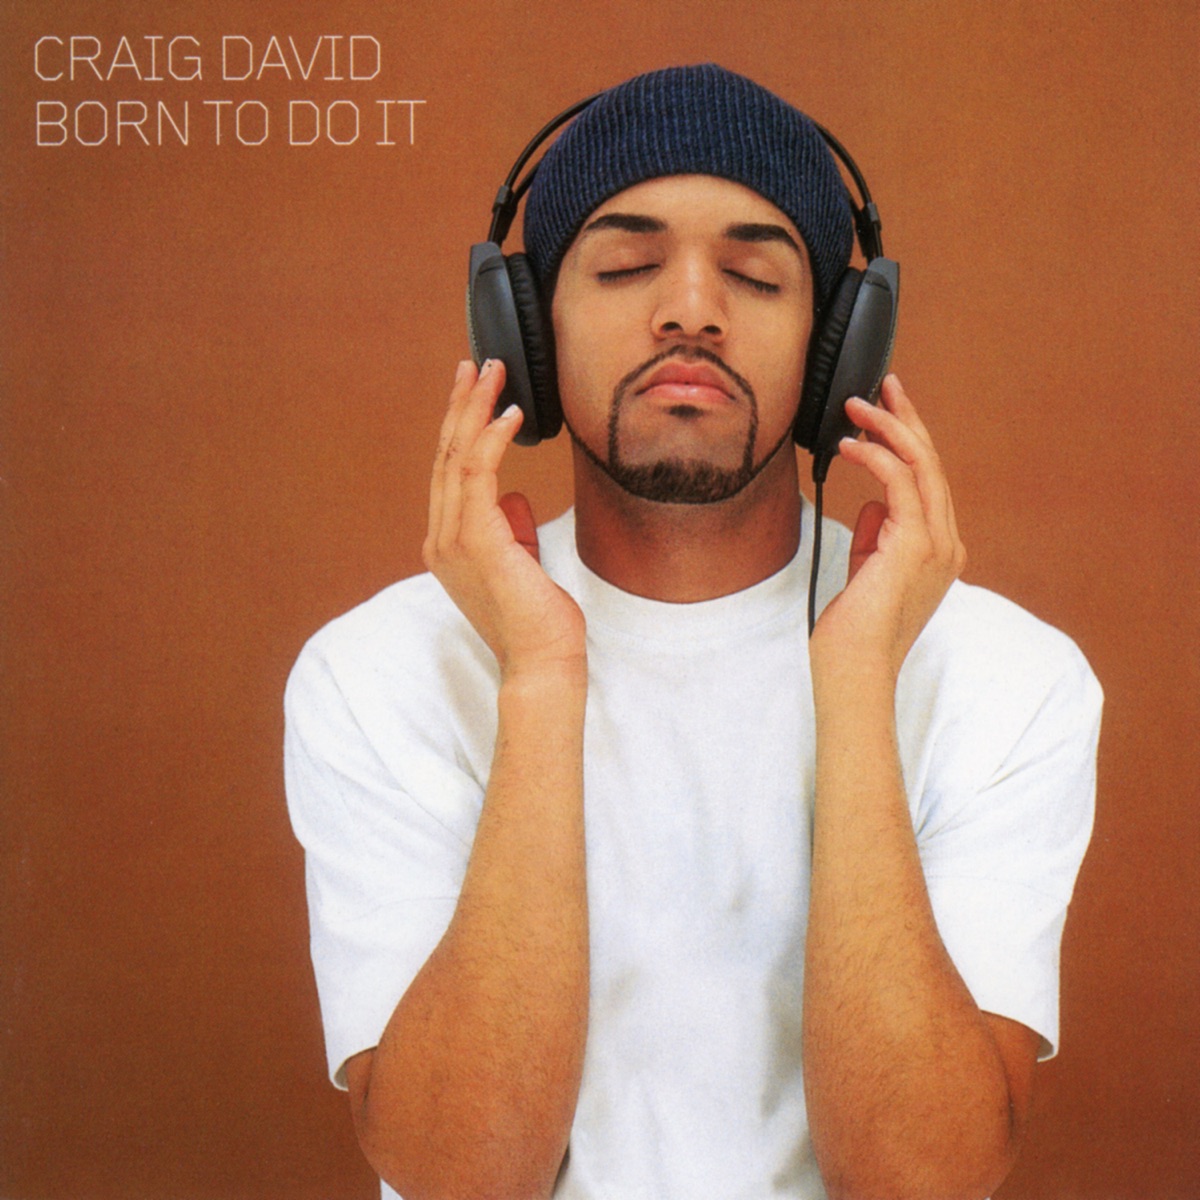 Born to Do It - Album by Craig David - Apple Music